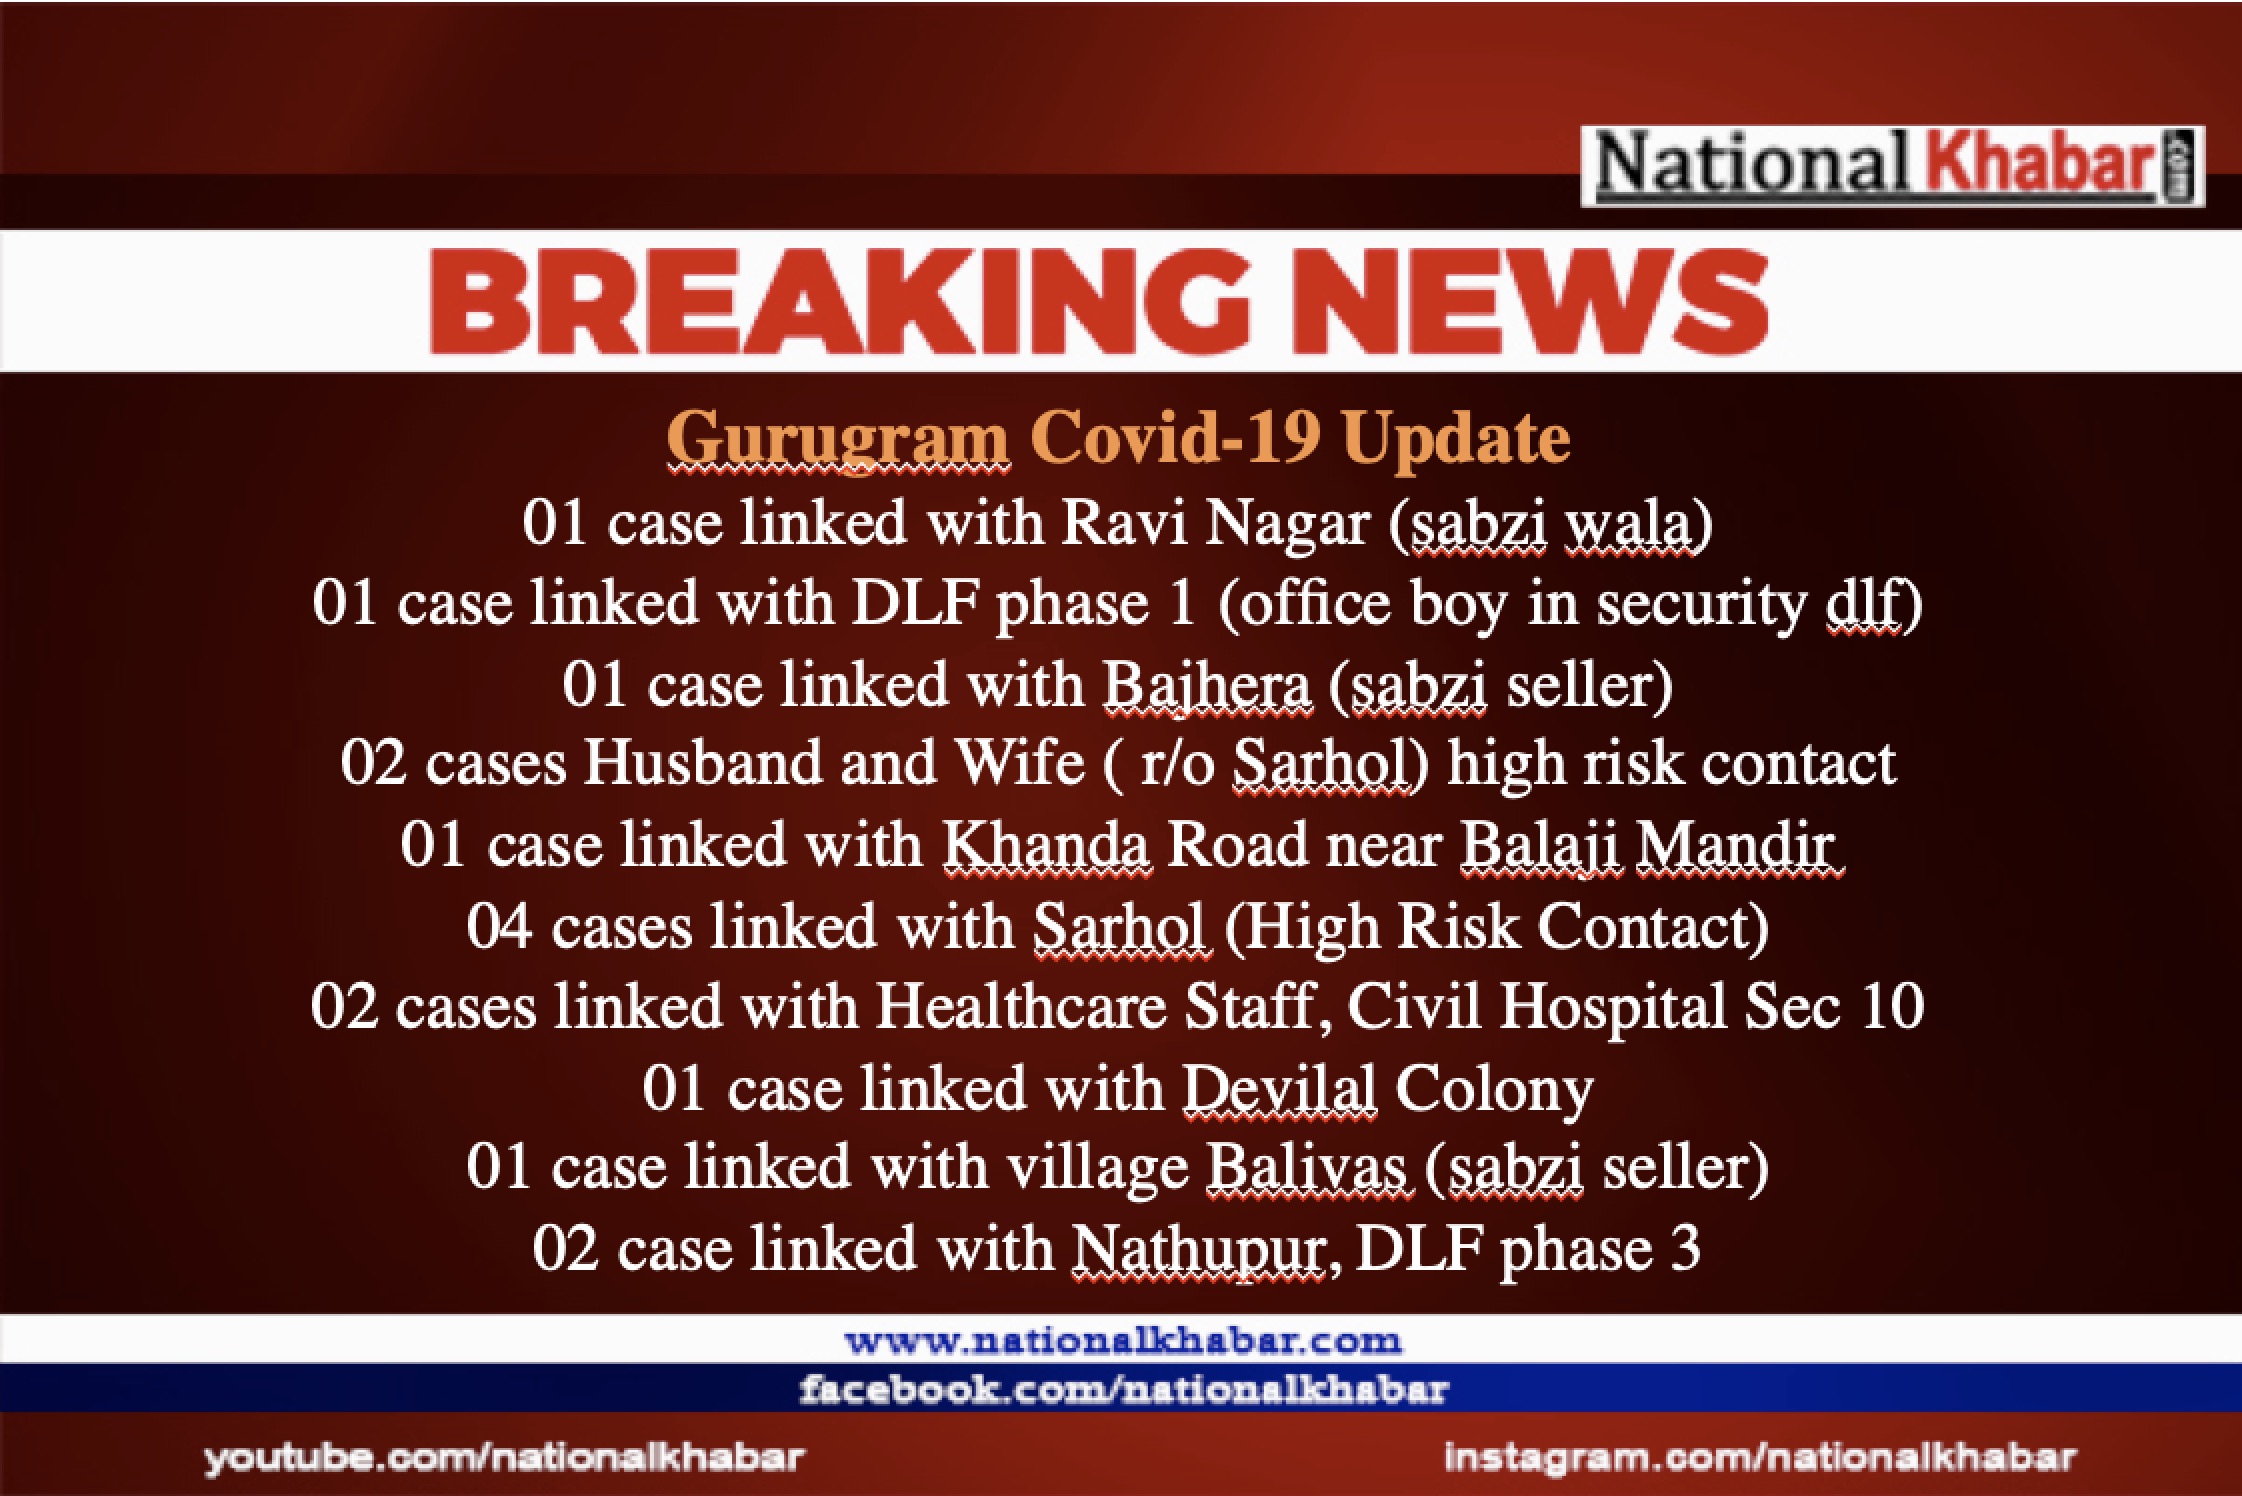 New cases reported today in Gurugram